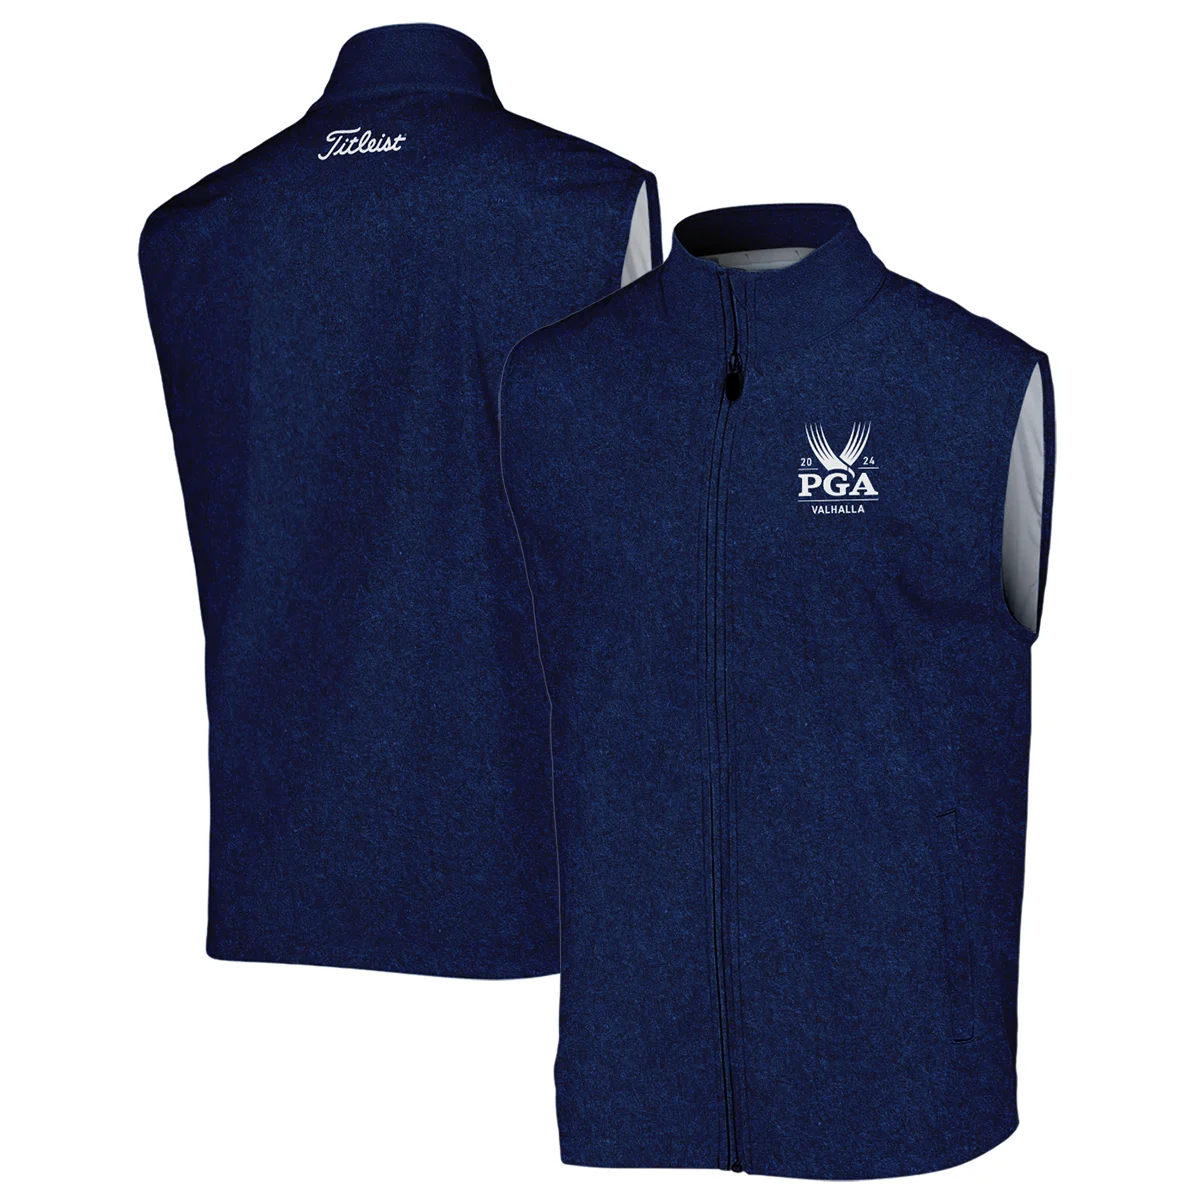 Special Version 2024 PGA Championship Valhalla Titleist Bomber Jacket Blue Paperboard Texture Bomber Jacket